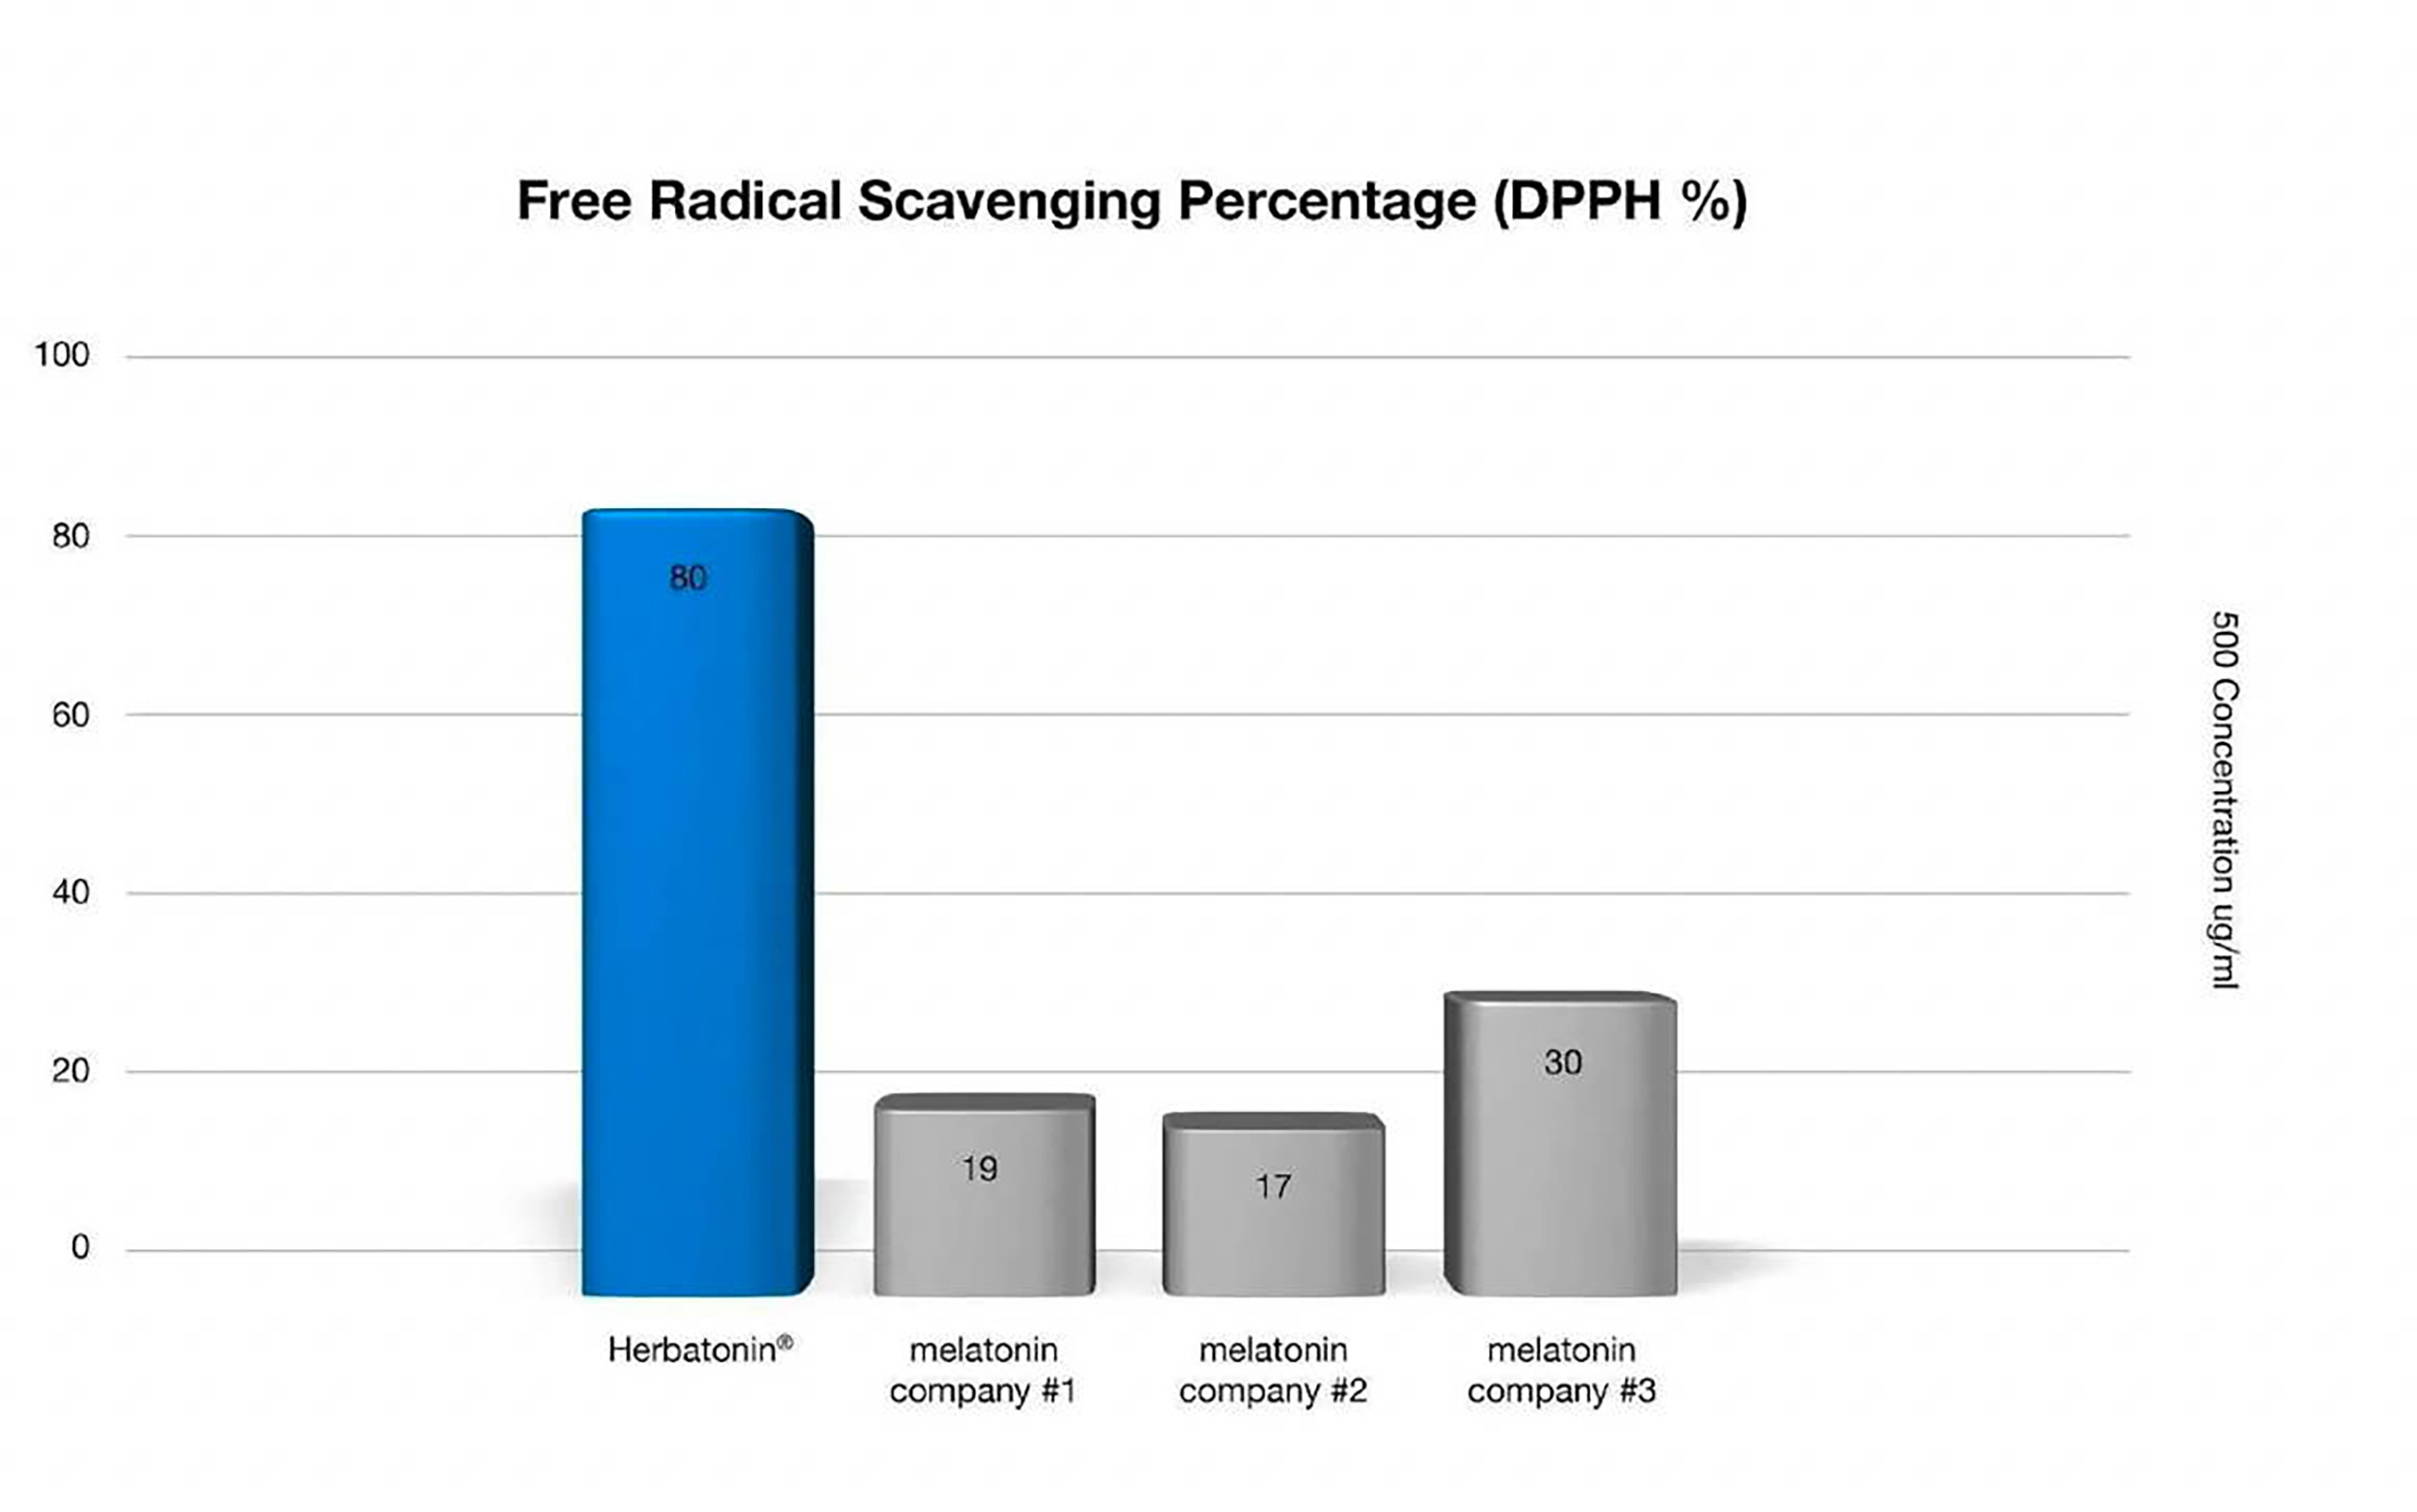 free radical scavenging percentage (DPPH%) of herbatonin vs three other melatonin brands